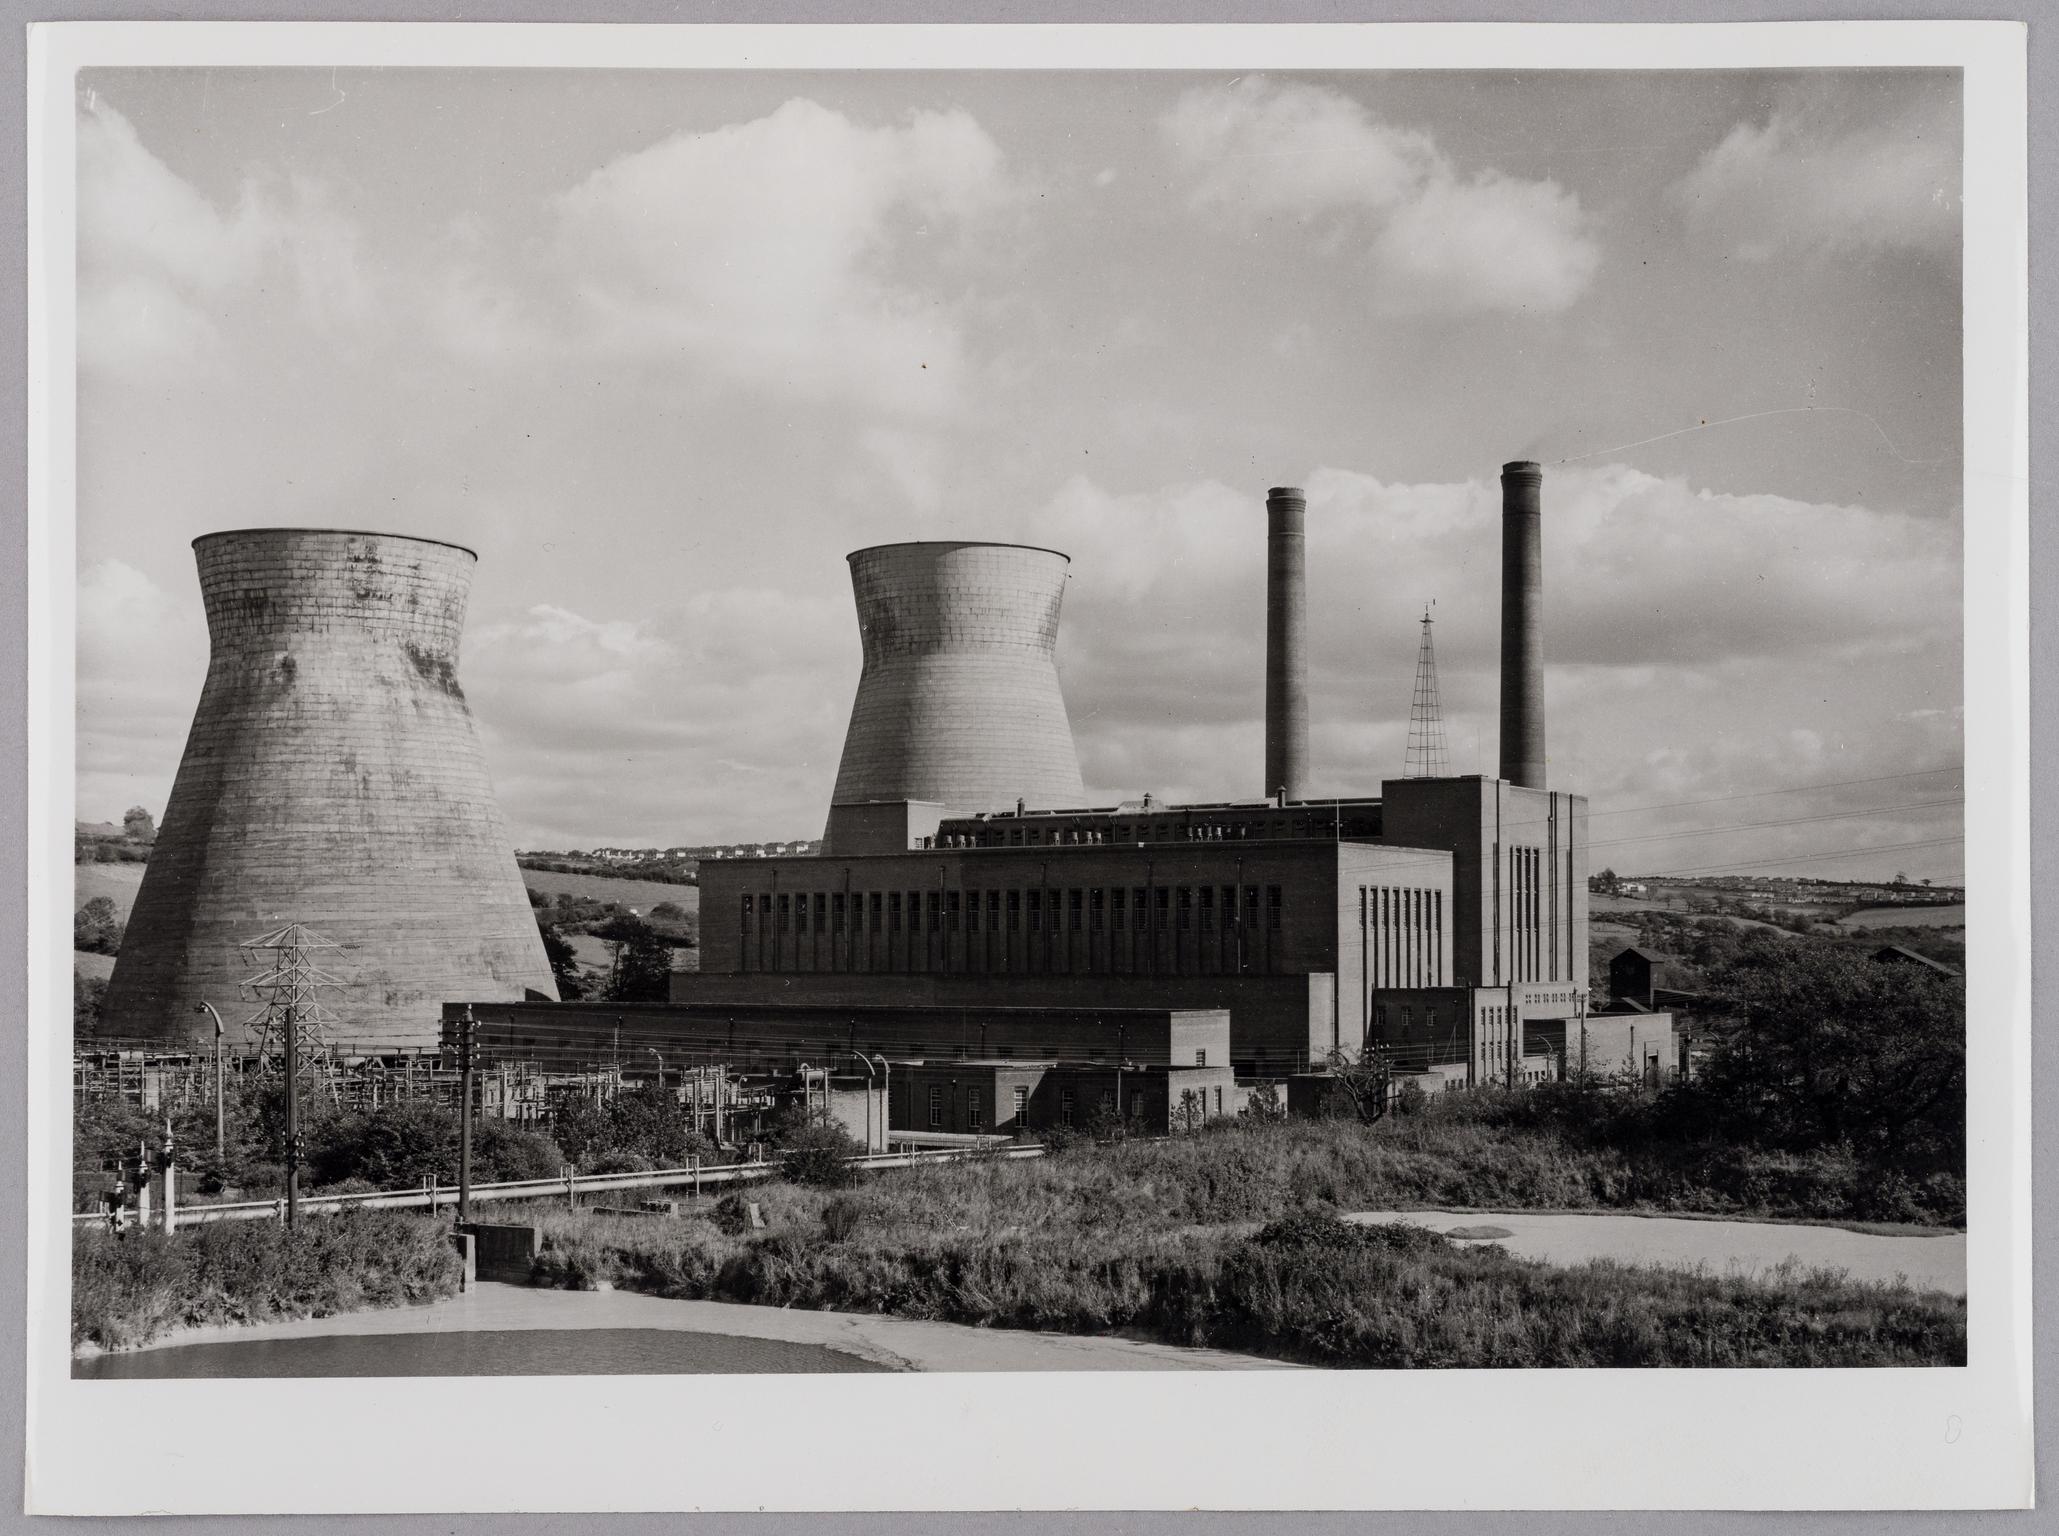 Llynfi Power Station, photograph